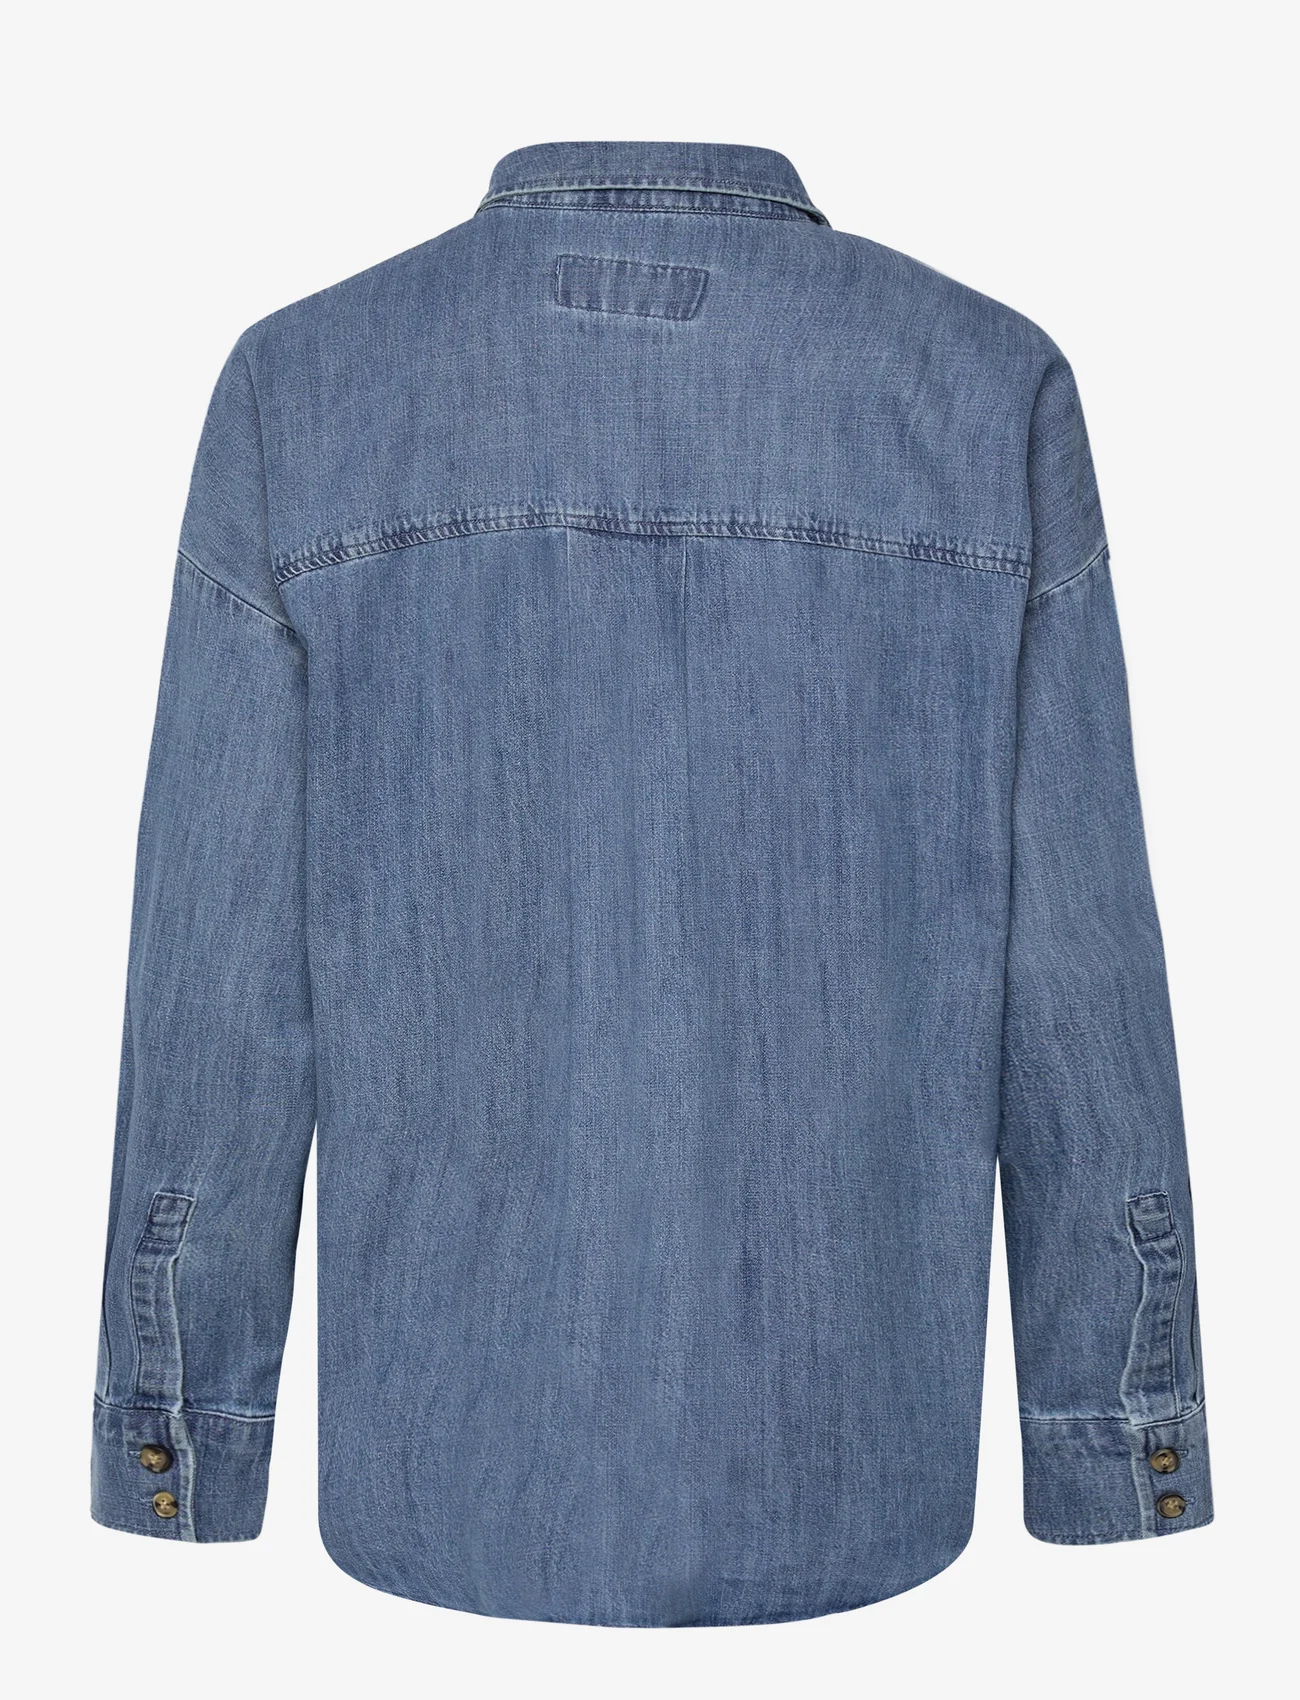 Esprit Casual - Women Blouses woven long sleeve - jeansskjortor - blue medium wash - 1